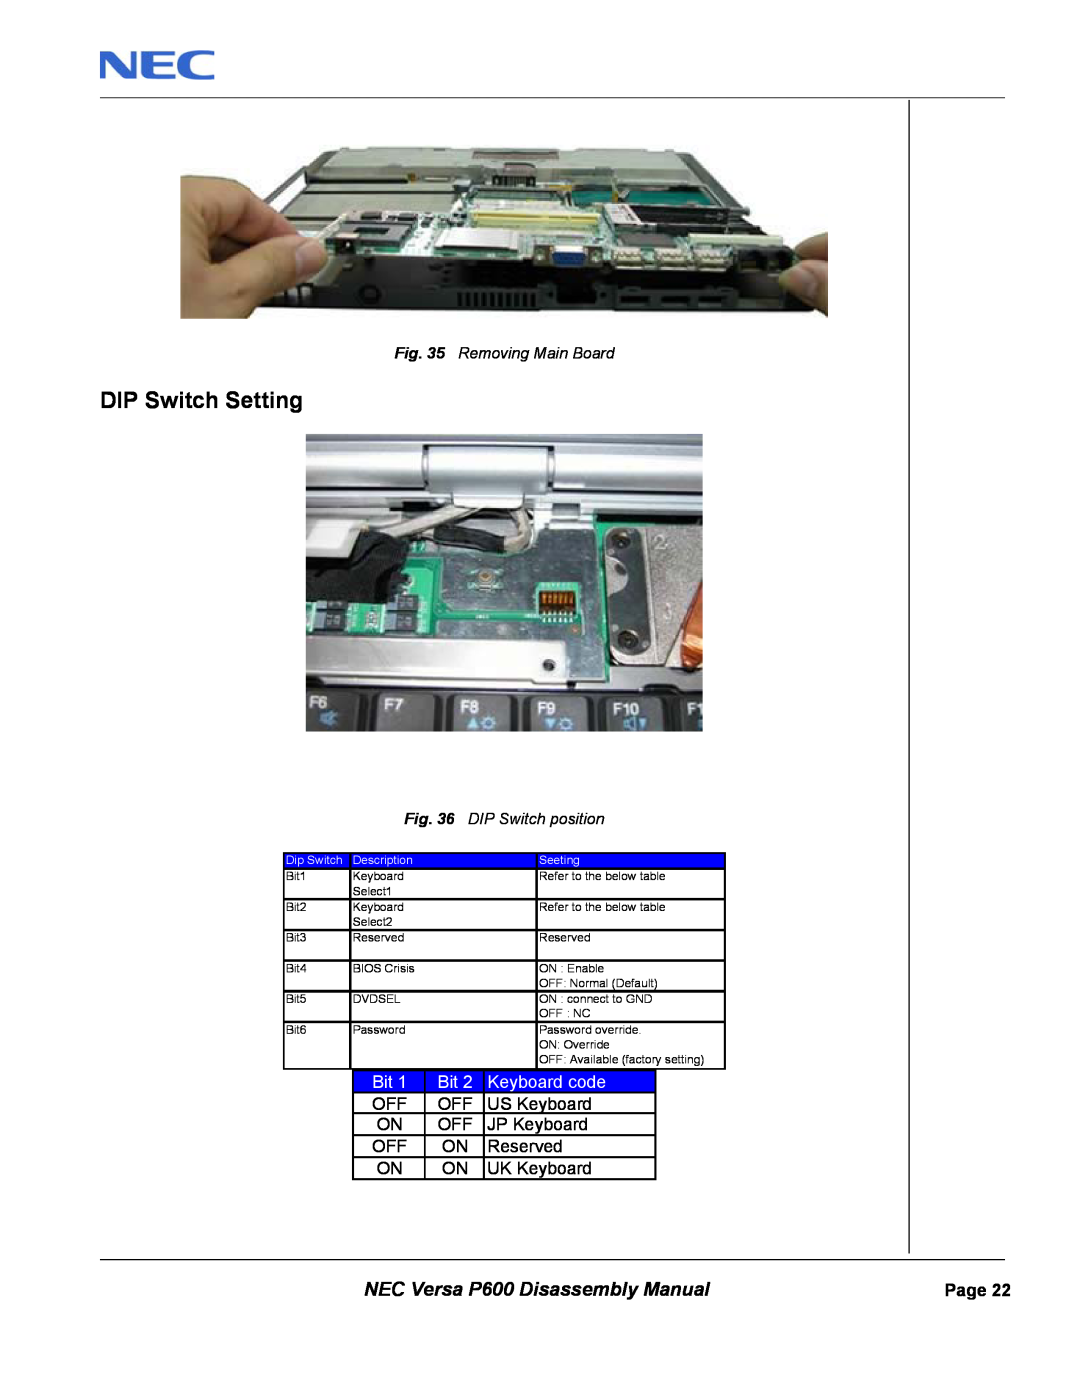 NEC manual DIP Switch Setting, NEC Versa P600 Disassembly Manual, Keyboard code 